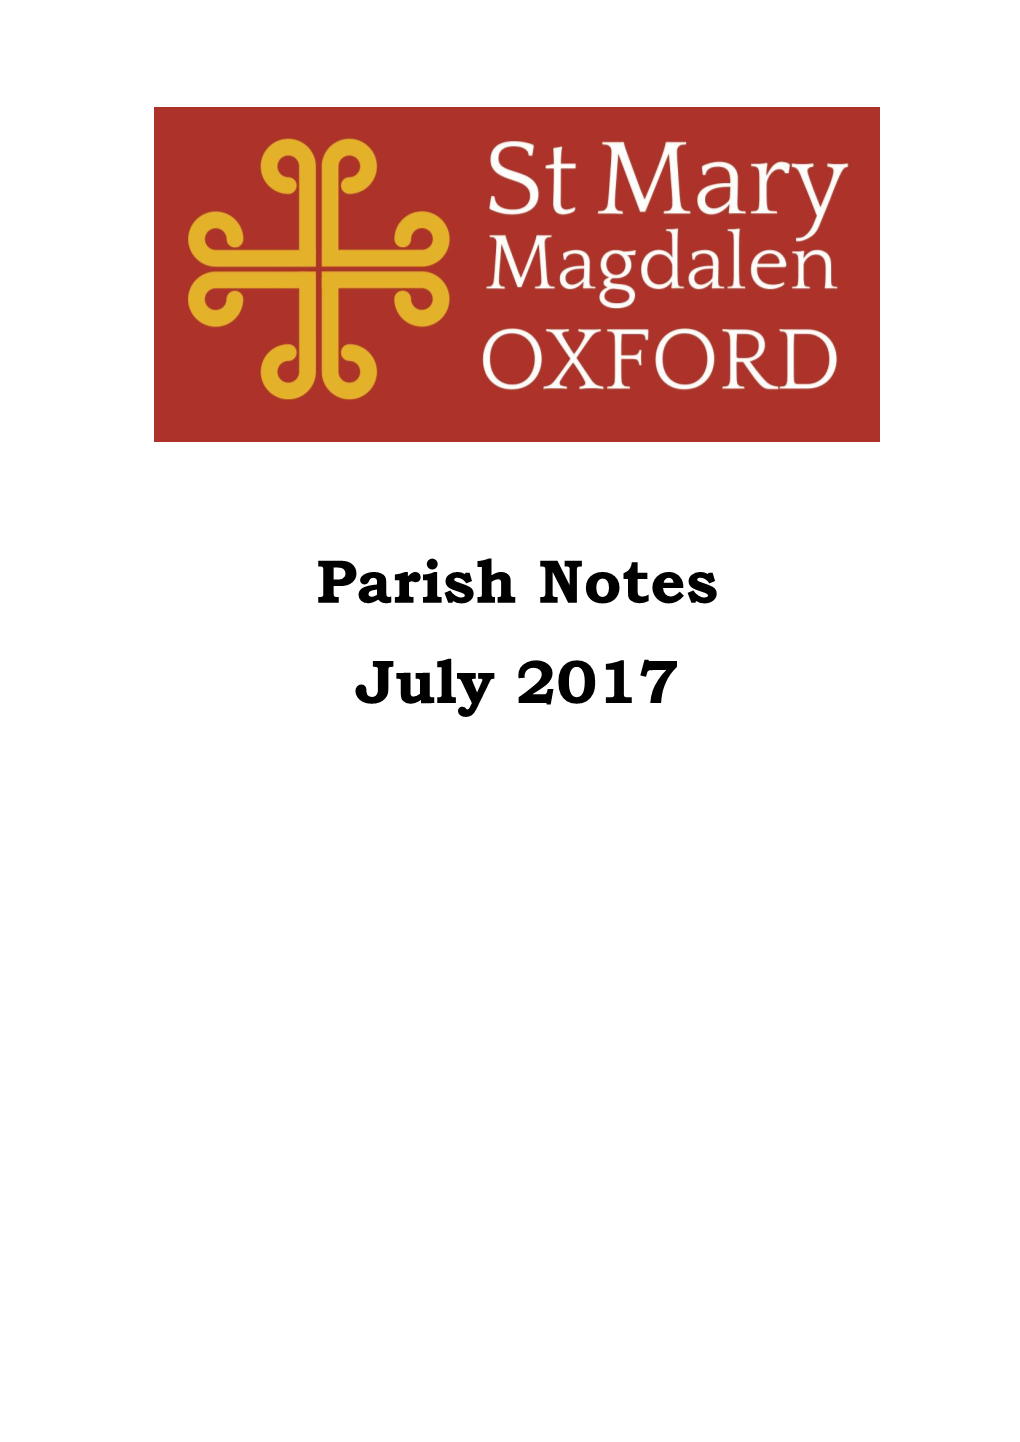 Parish Notes July 2017